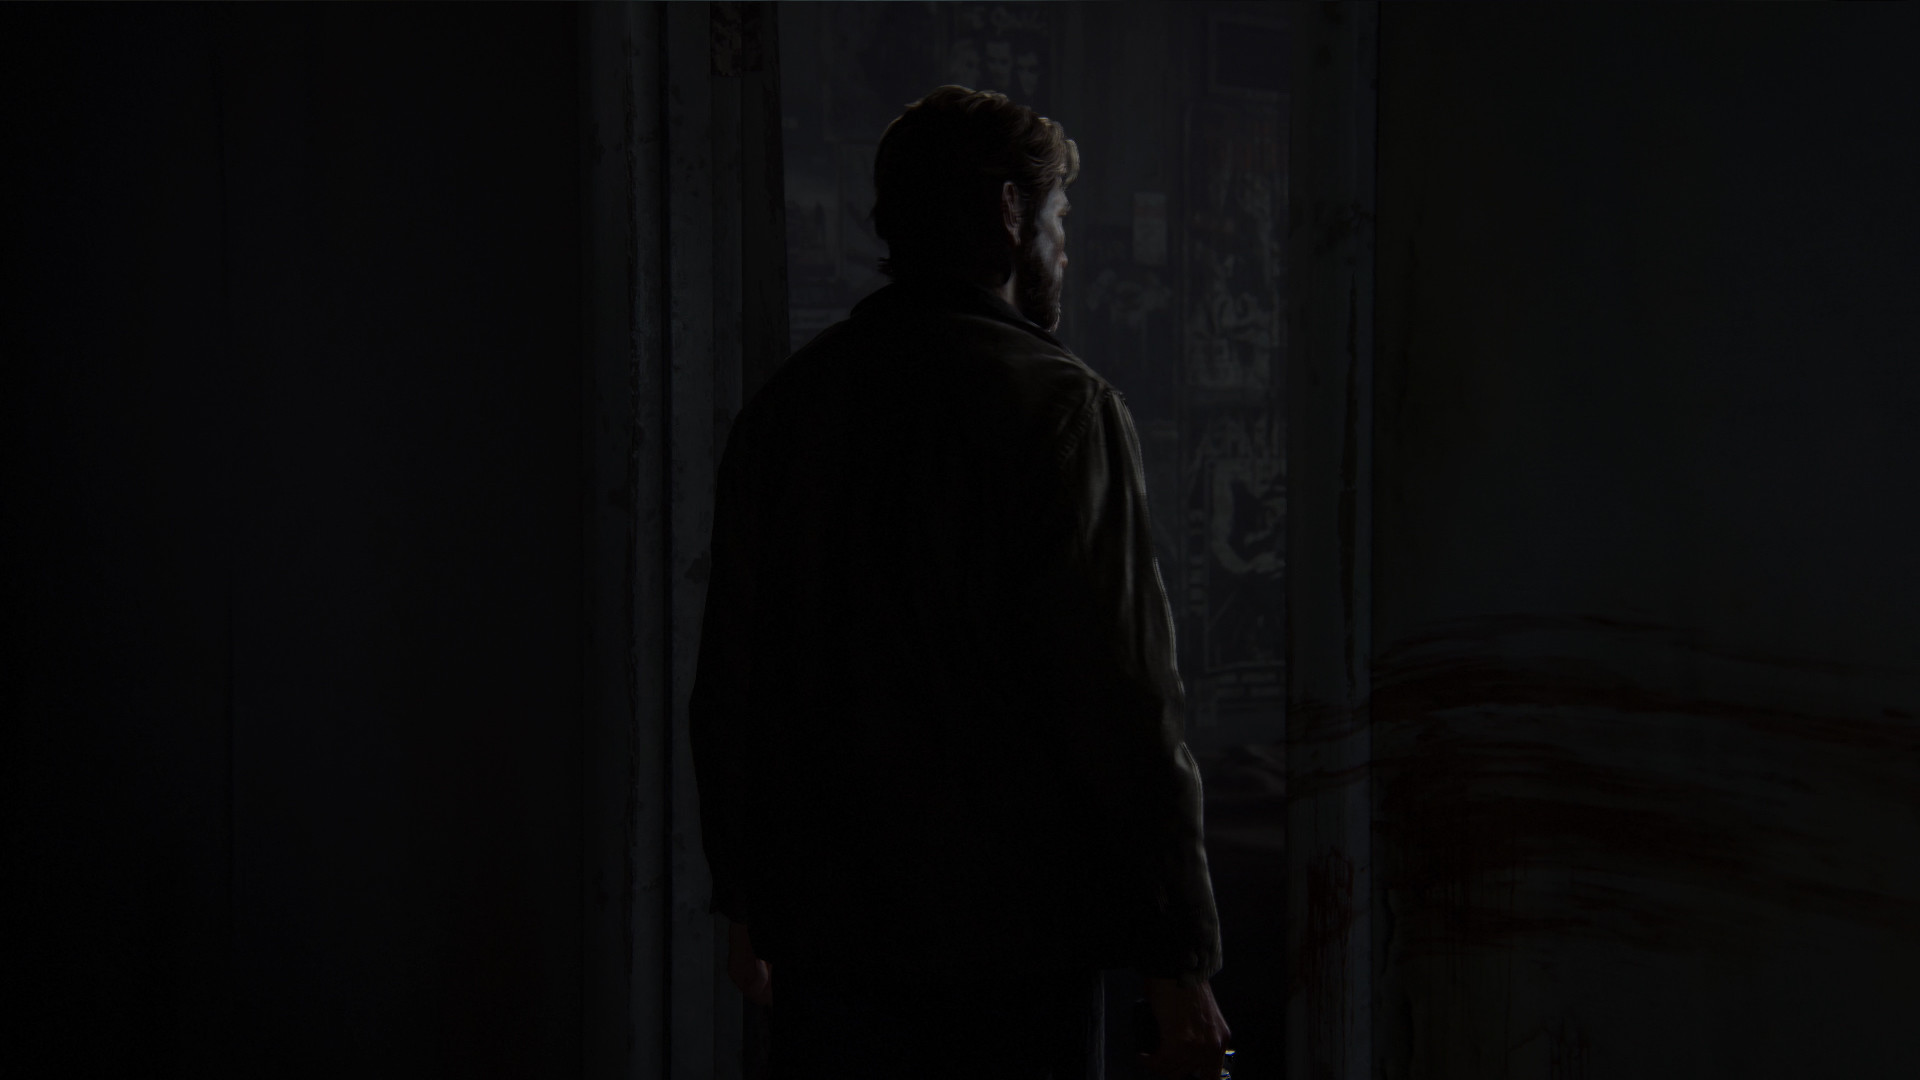 PSX: The Last of Us Part Two Announcement Trailer